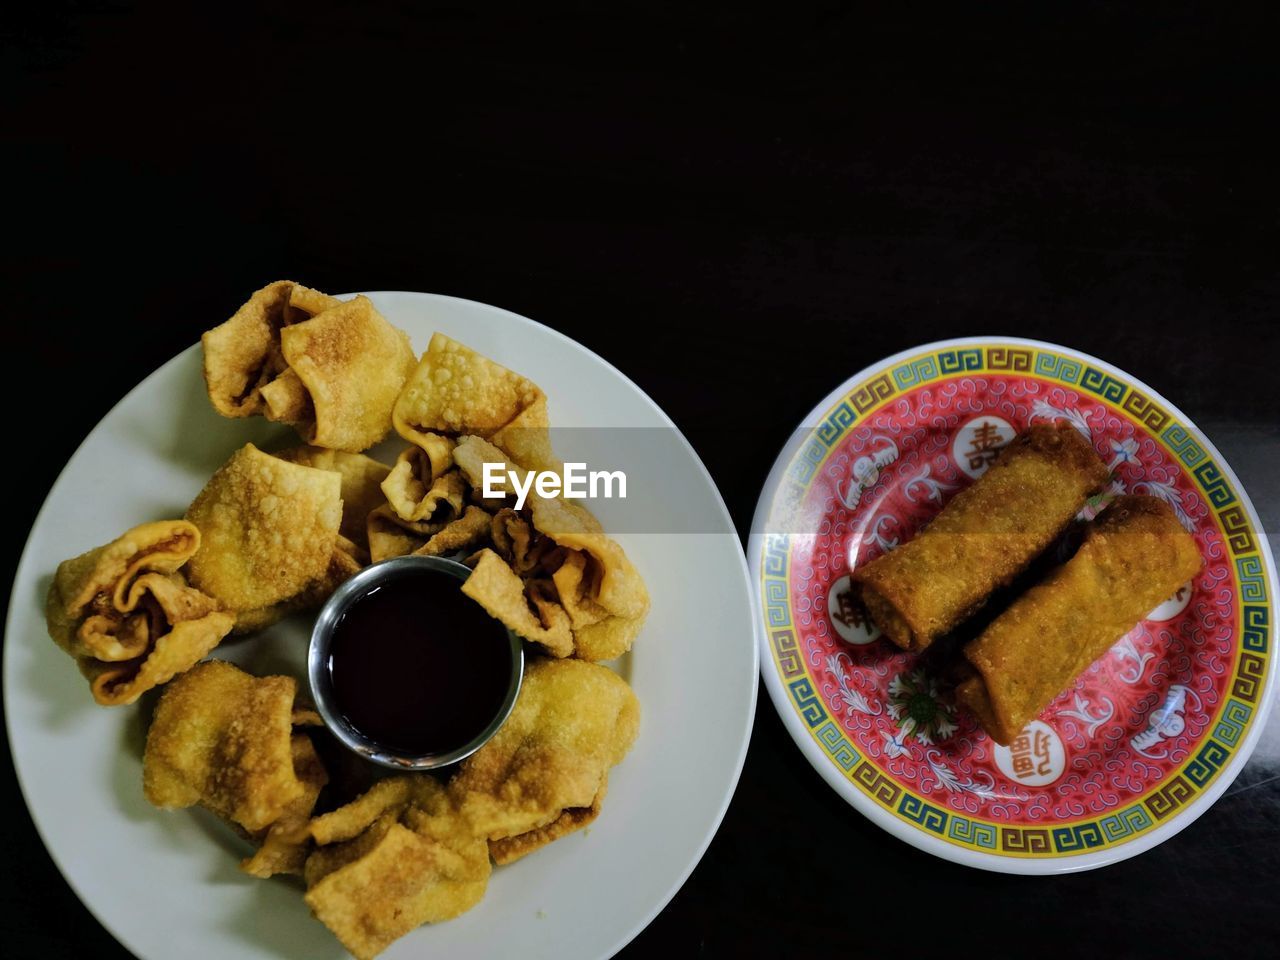 Chinese food egg roll, fried wontons, visual journal october 2018 omaha, nebraska